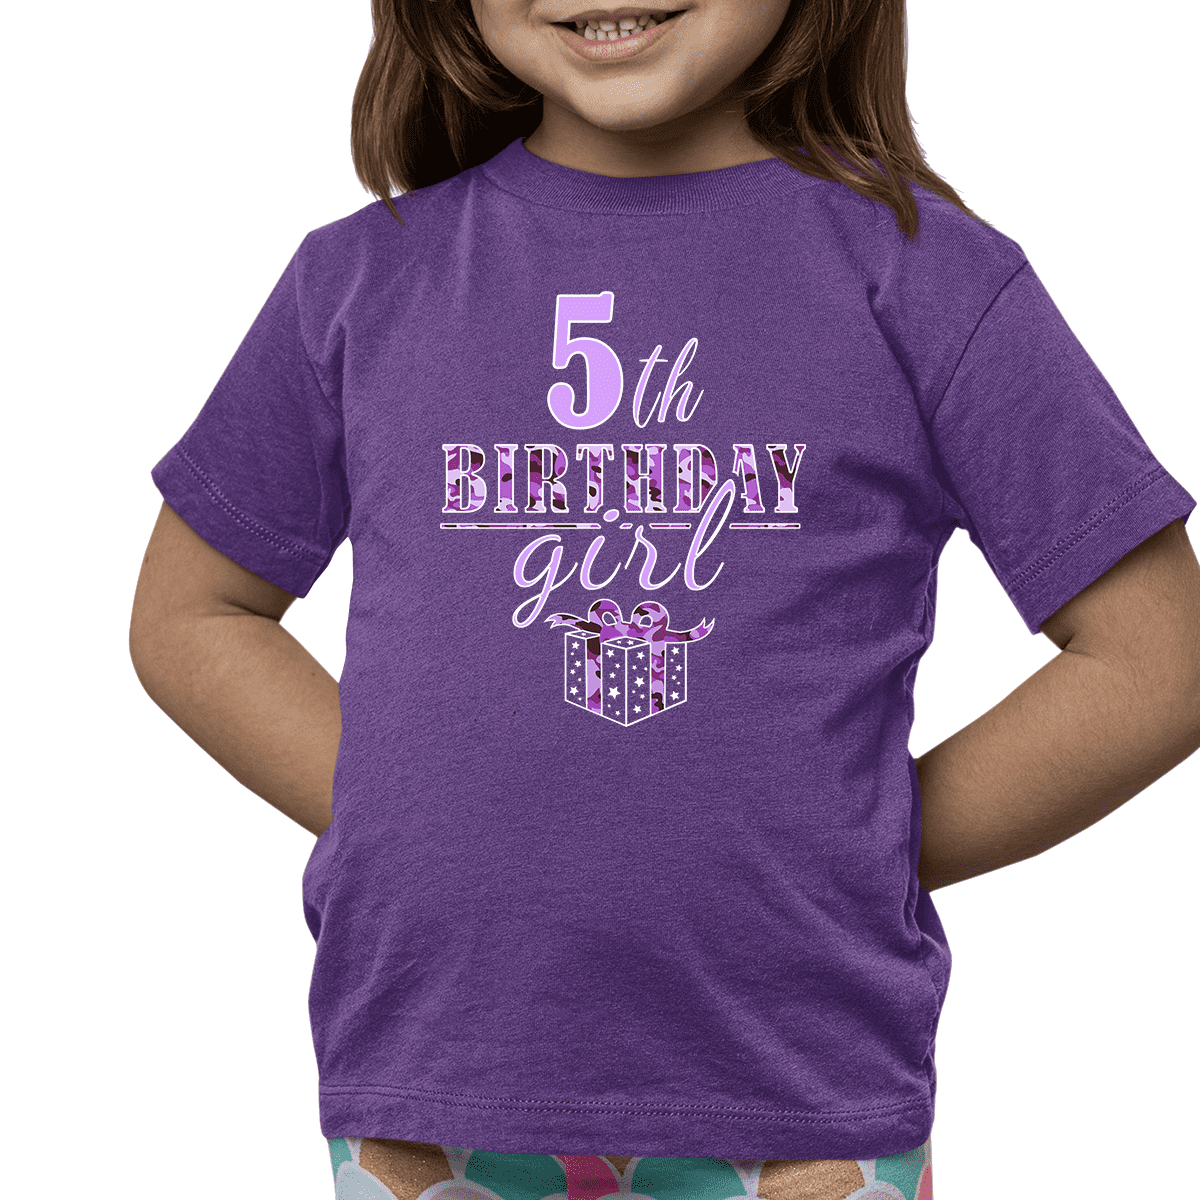 5th Birthday Shirt Girls Birthday Outfit 5 Year Old Girl 5th Birthday Gifts Cute Birthday Girl Shirt - Walmart.com